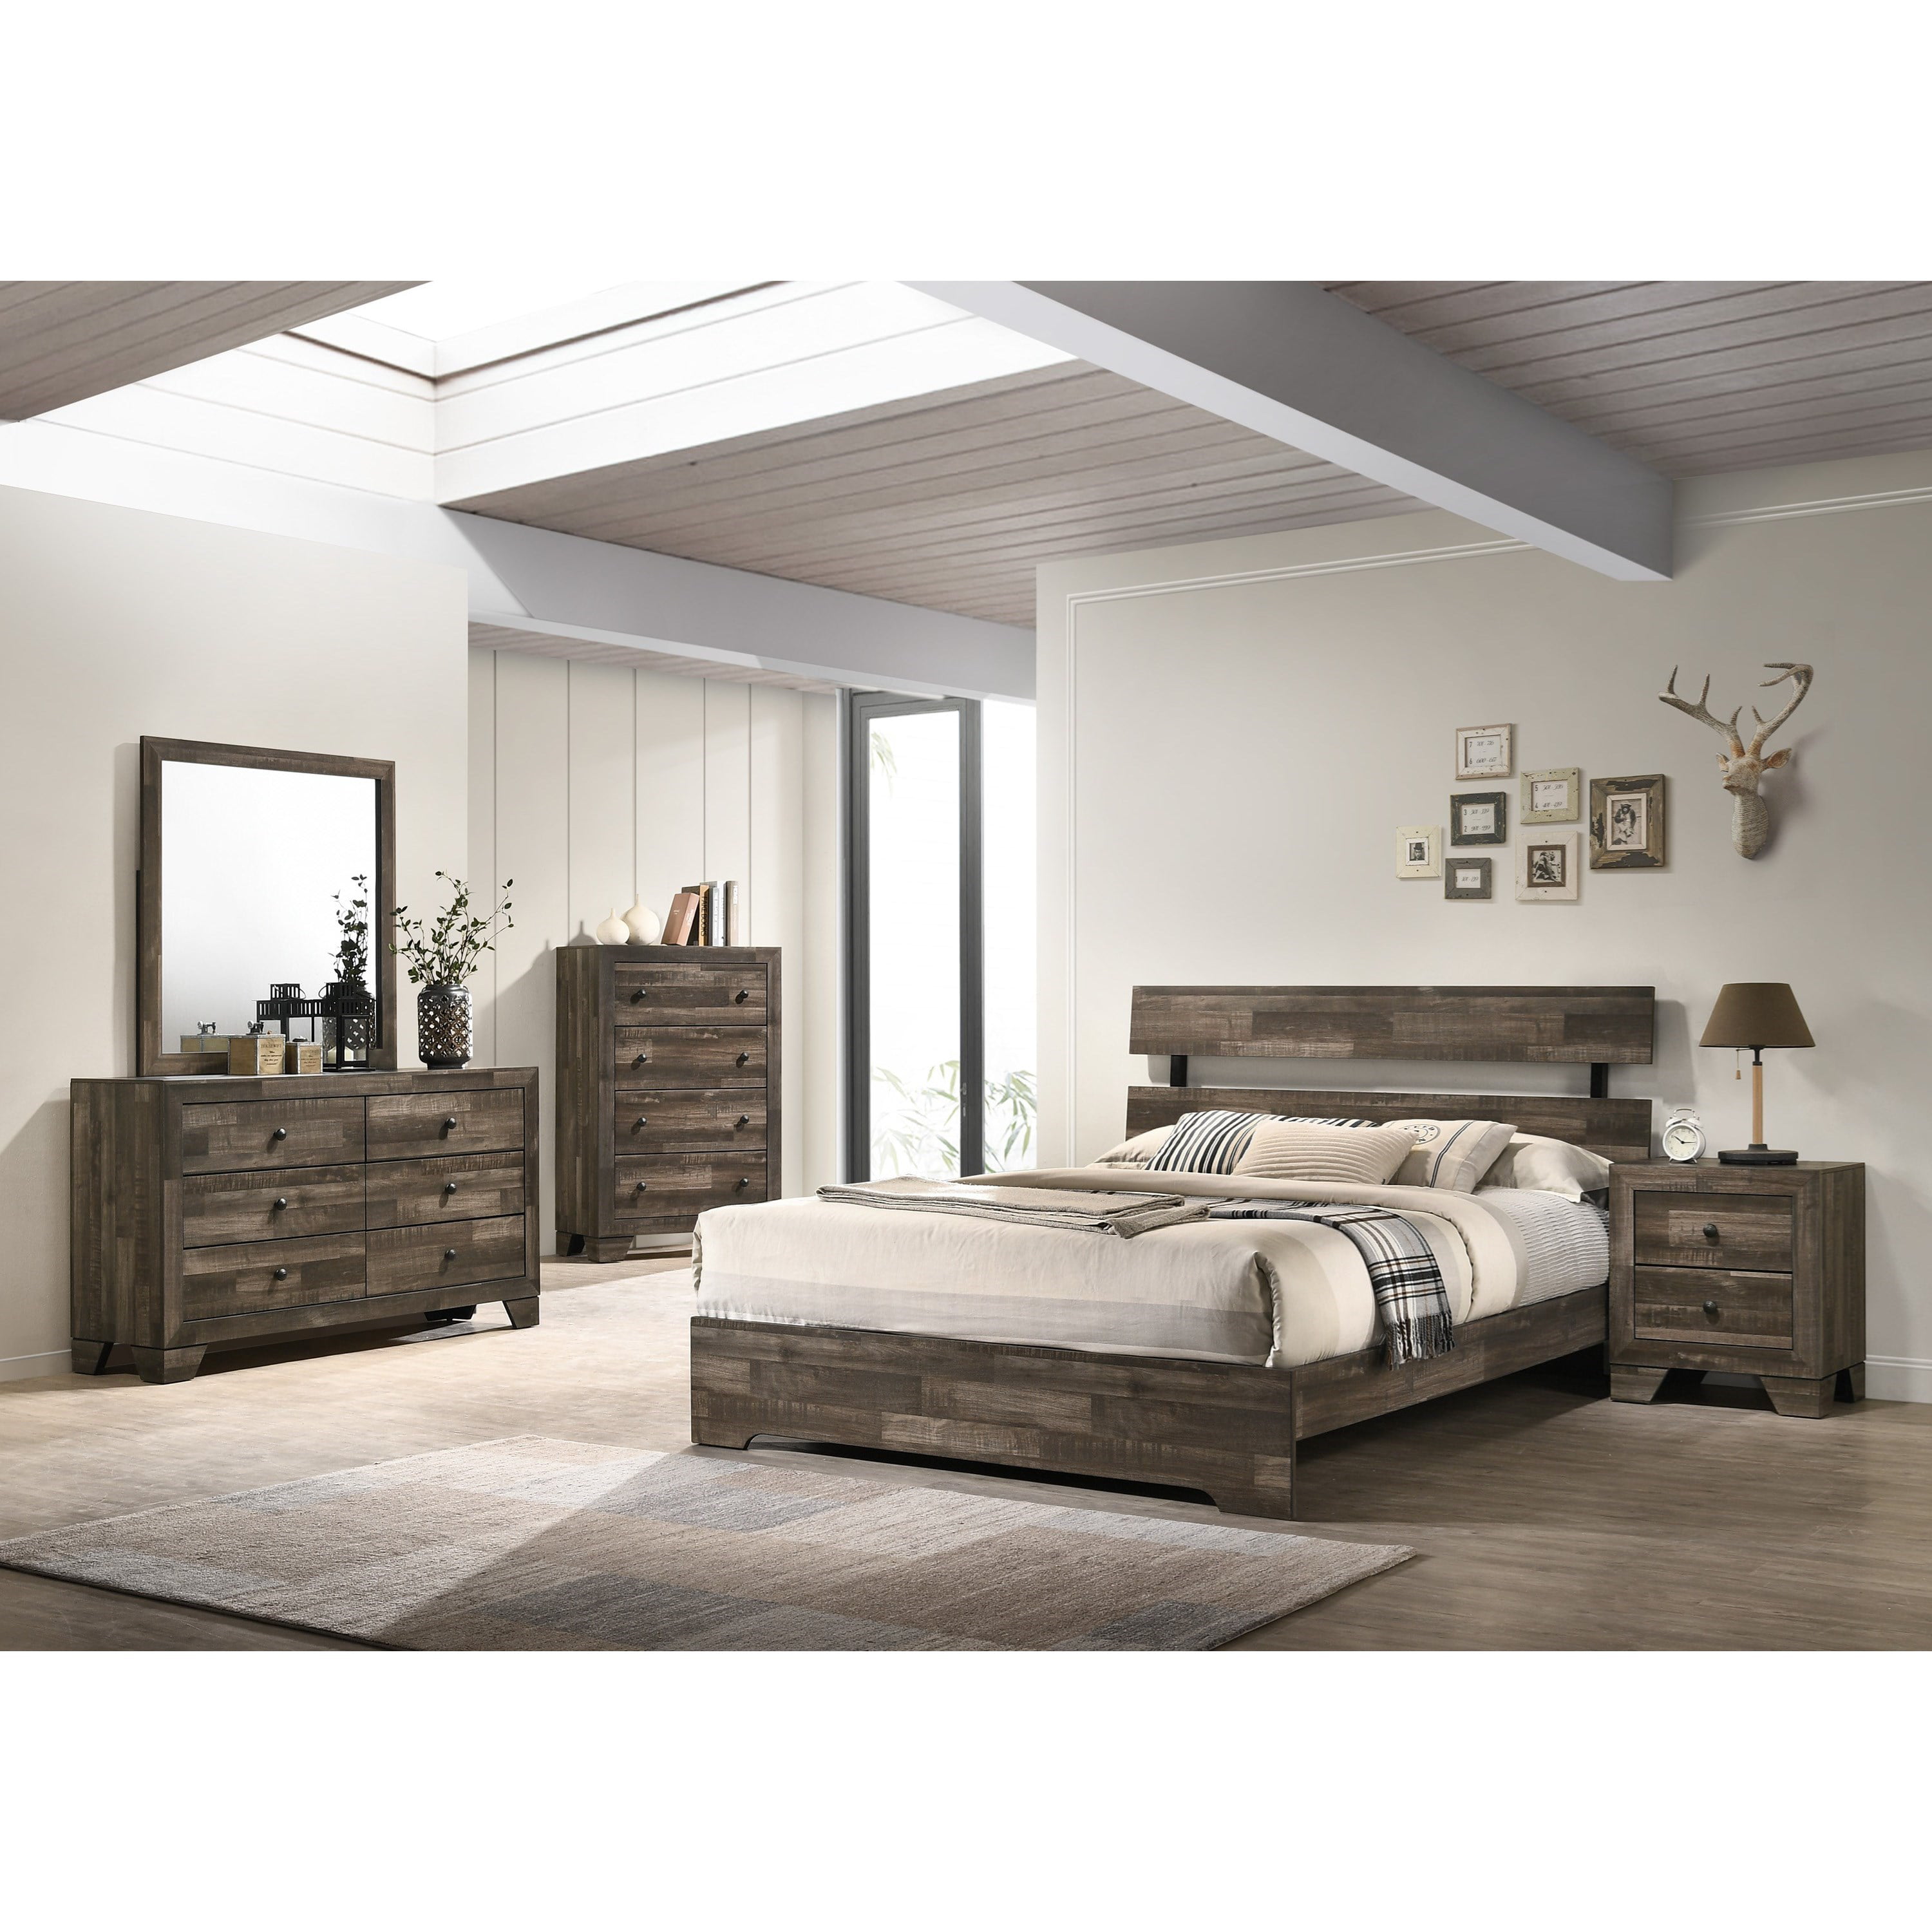 Rustic Brown Finish 4pc King Size Platform Bedroom Set Bed Dresser Mirror Nightstand Wooden Furniture